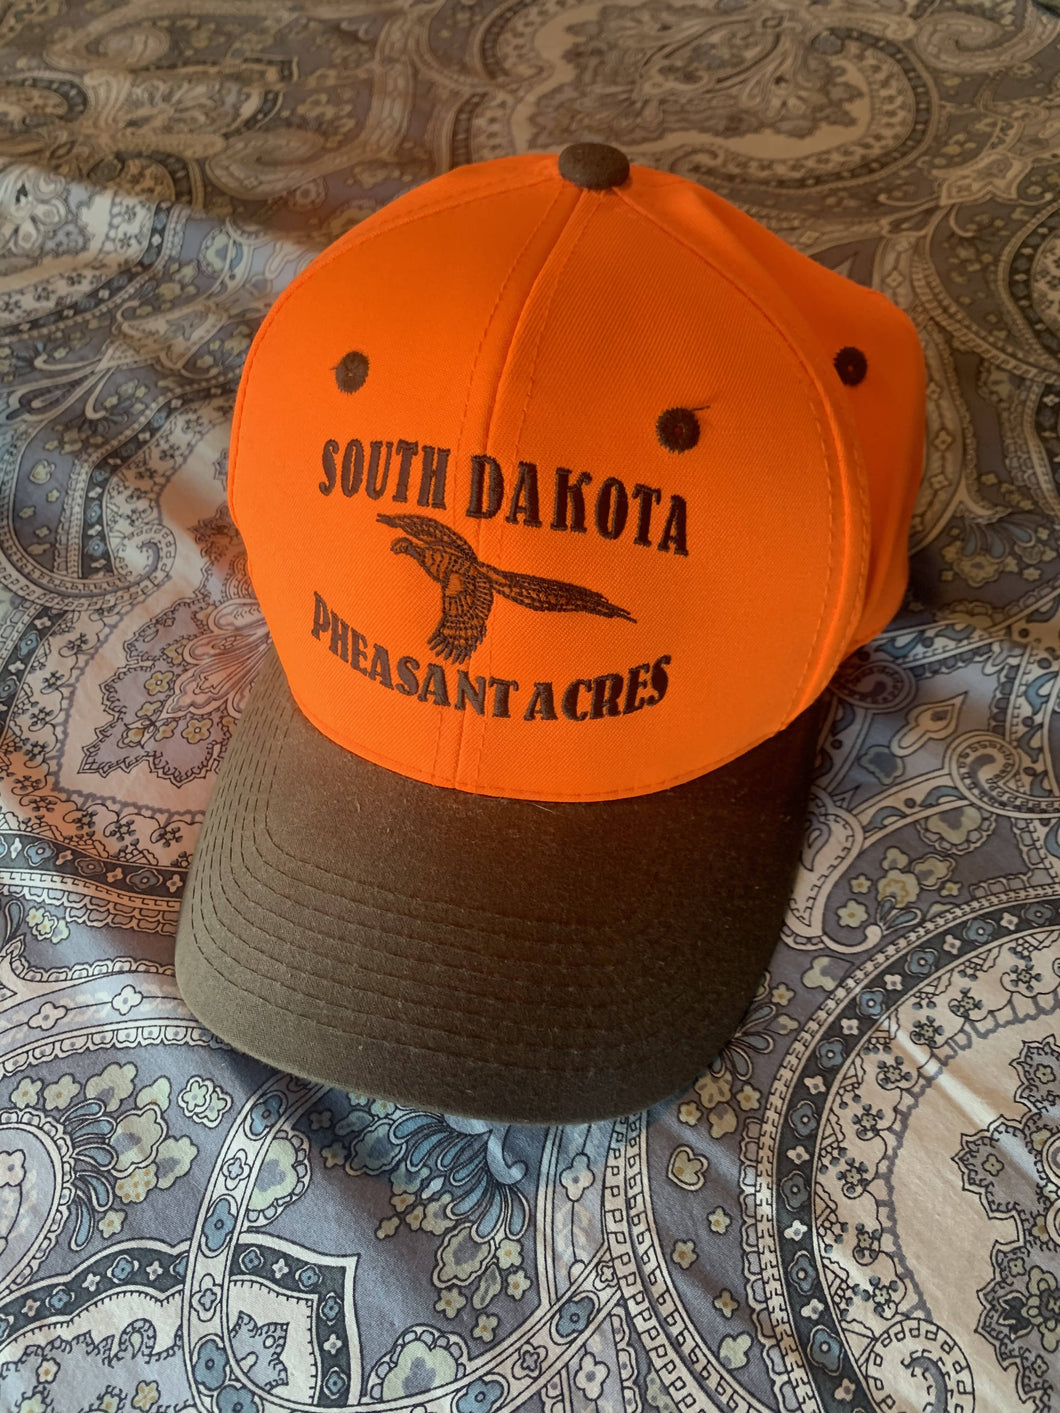 South Dakota Pheasant Acres hat